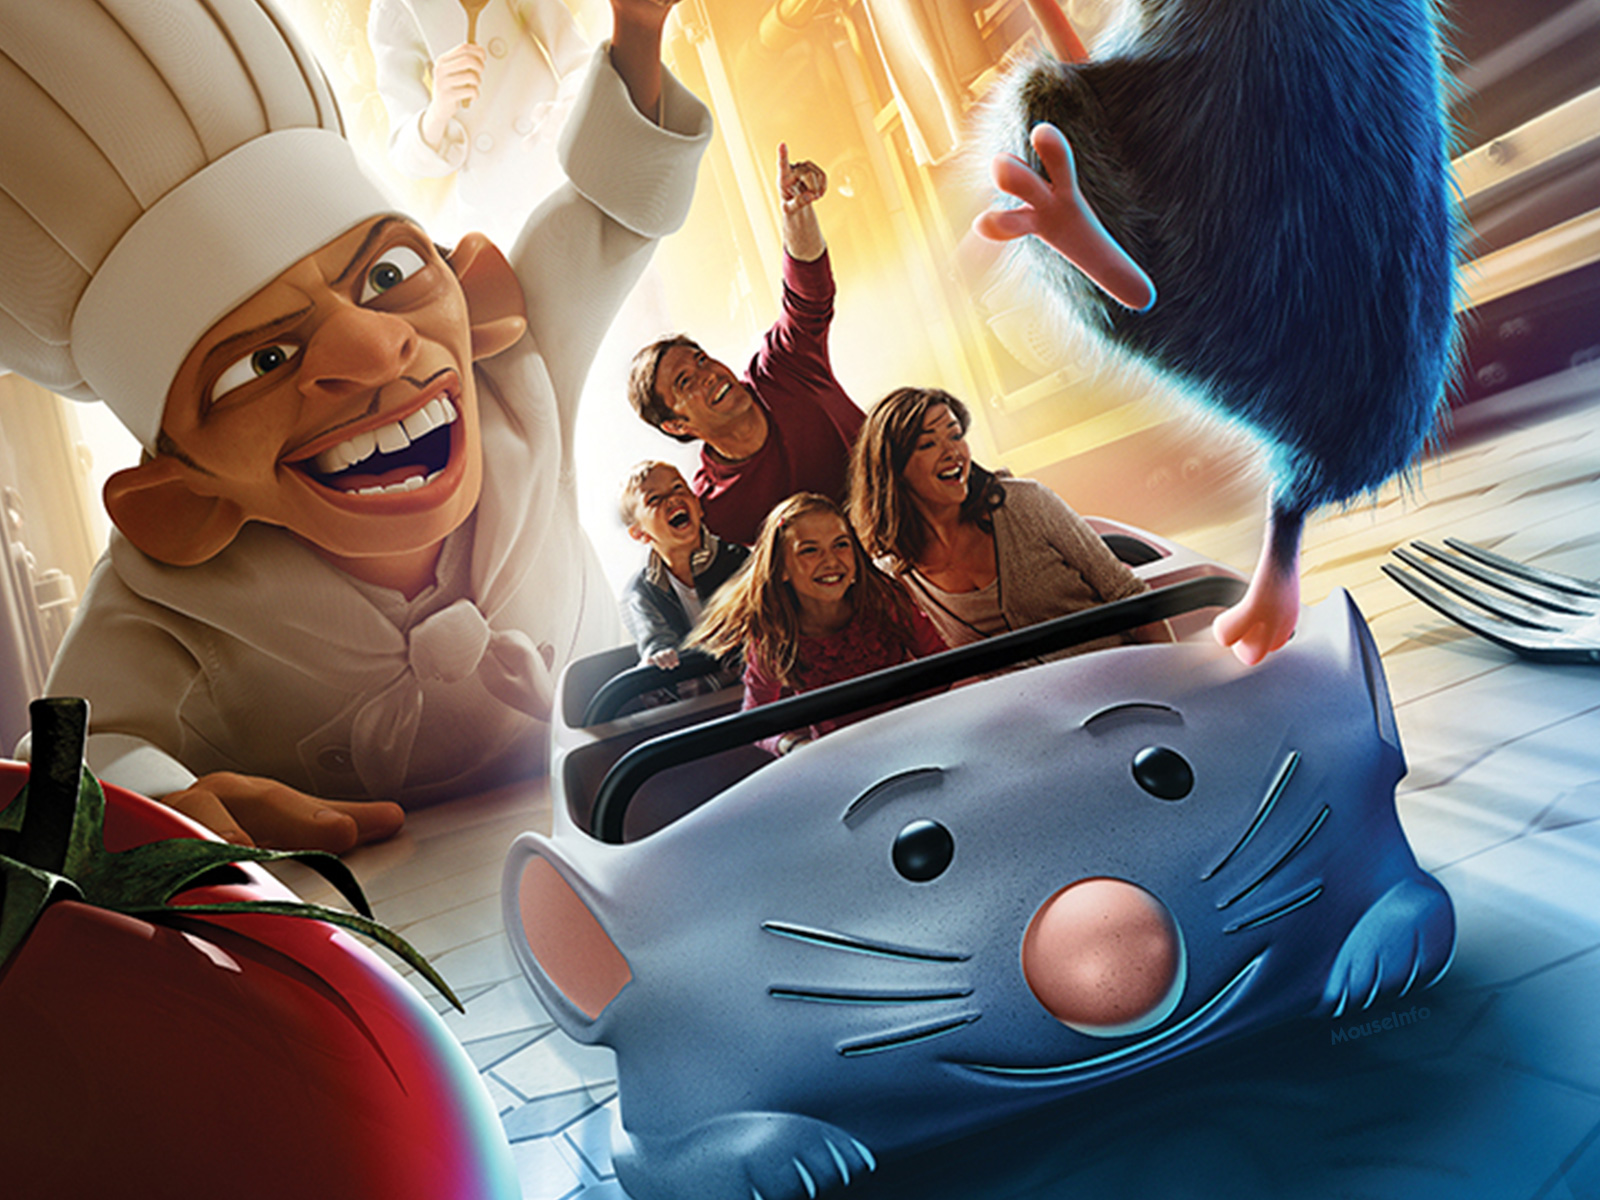 Disneyland Paris shares a sneak peek at “Ratatouille” the newest ...